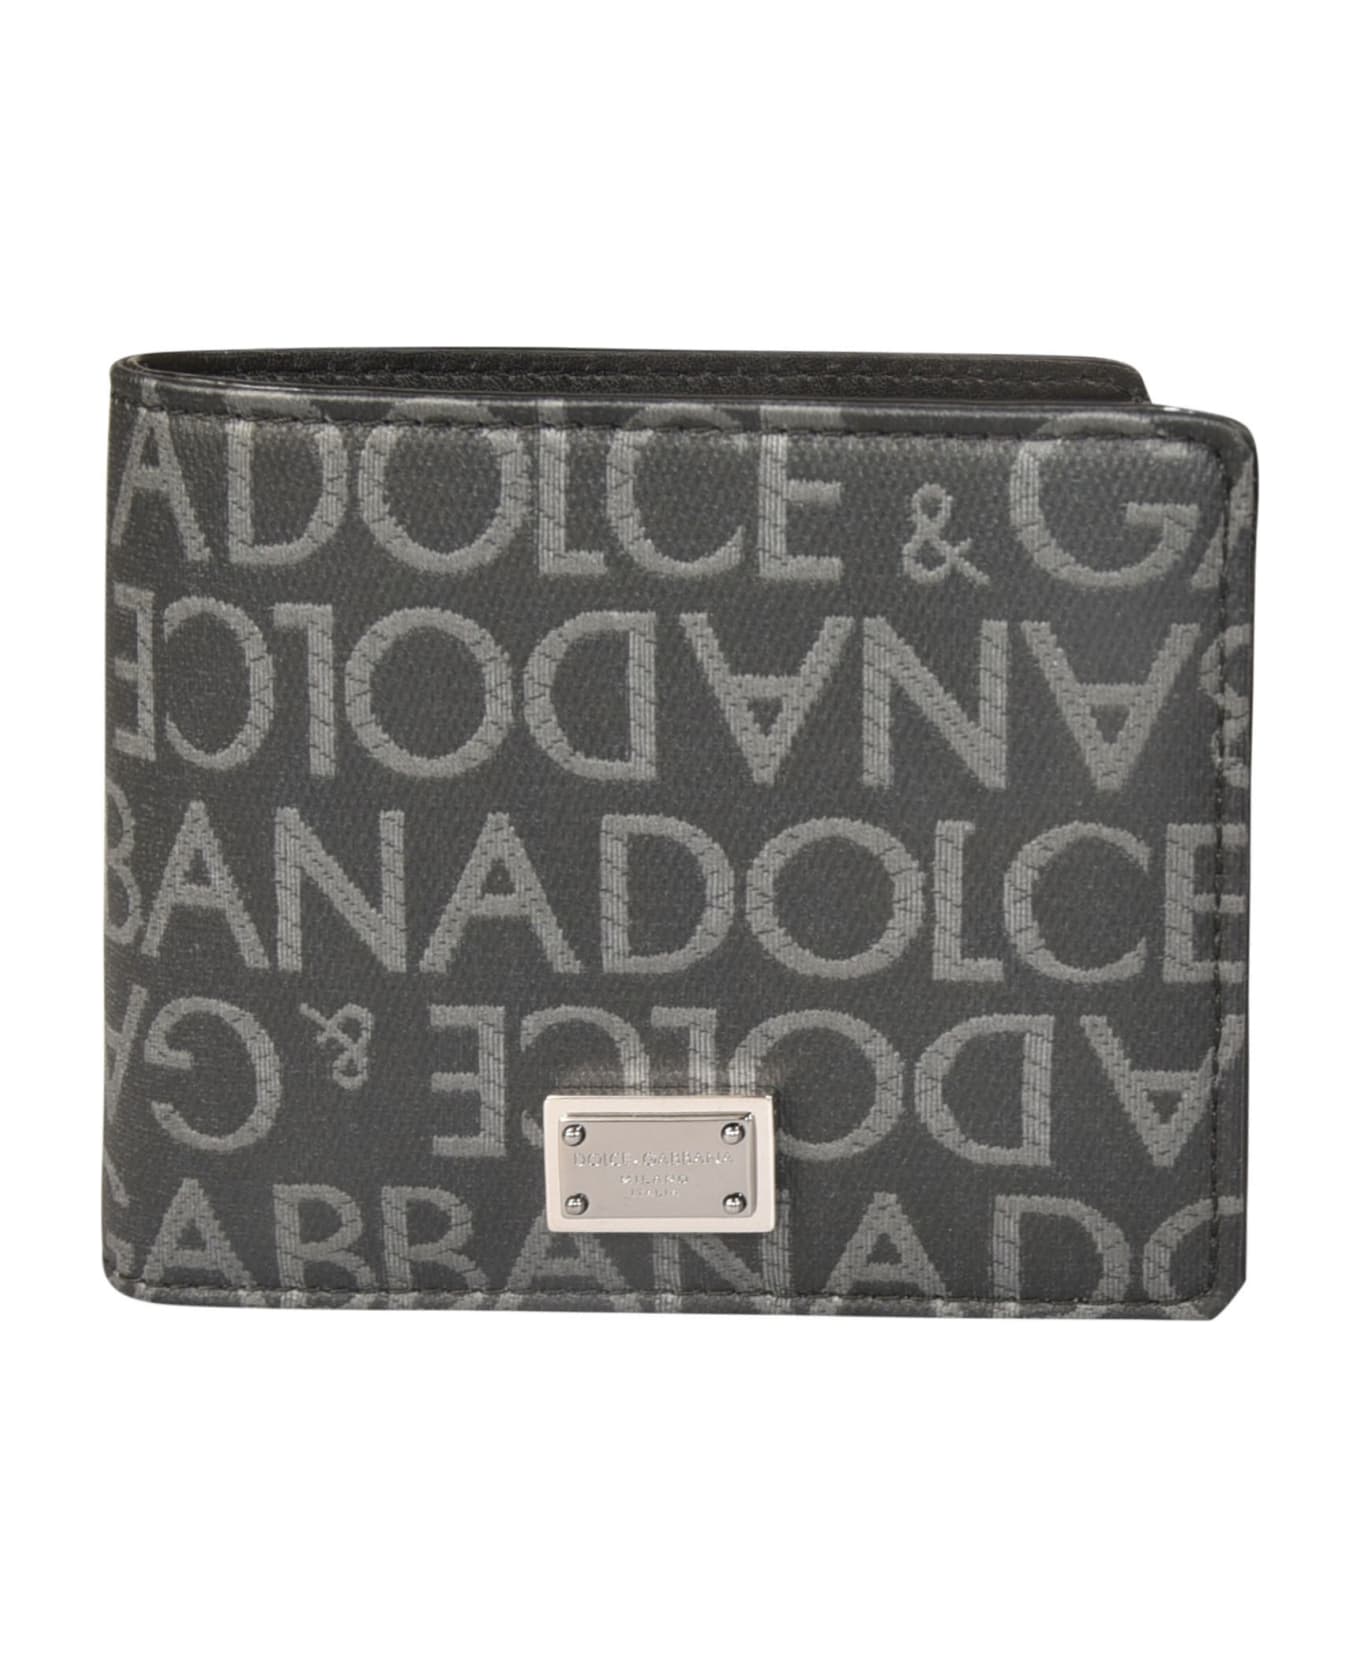 Dolce & Gabbana Bifold Wallet